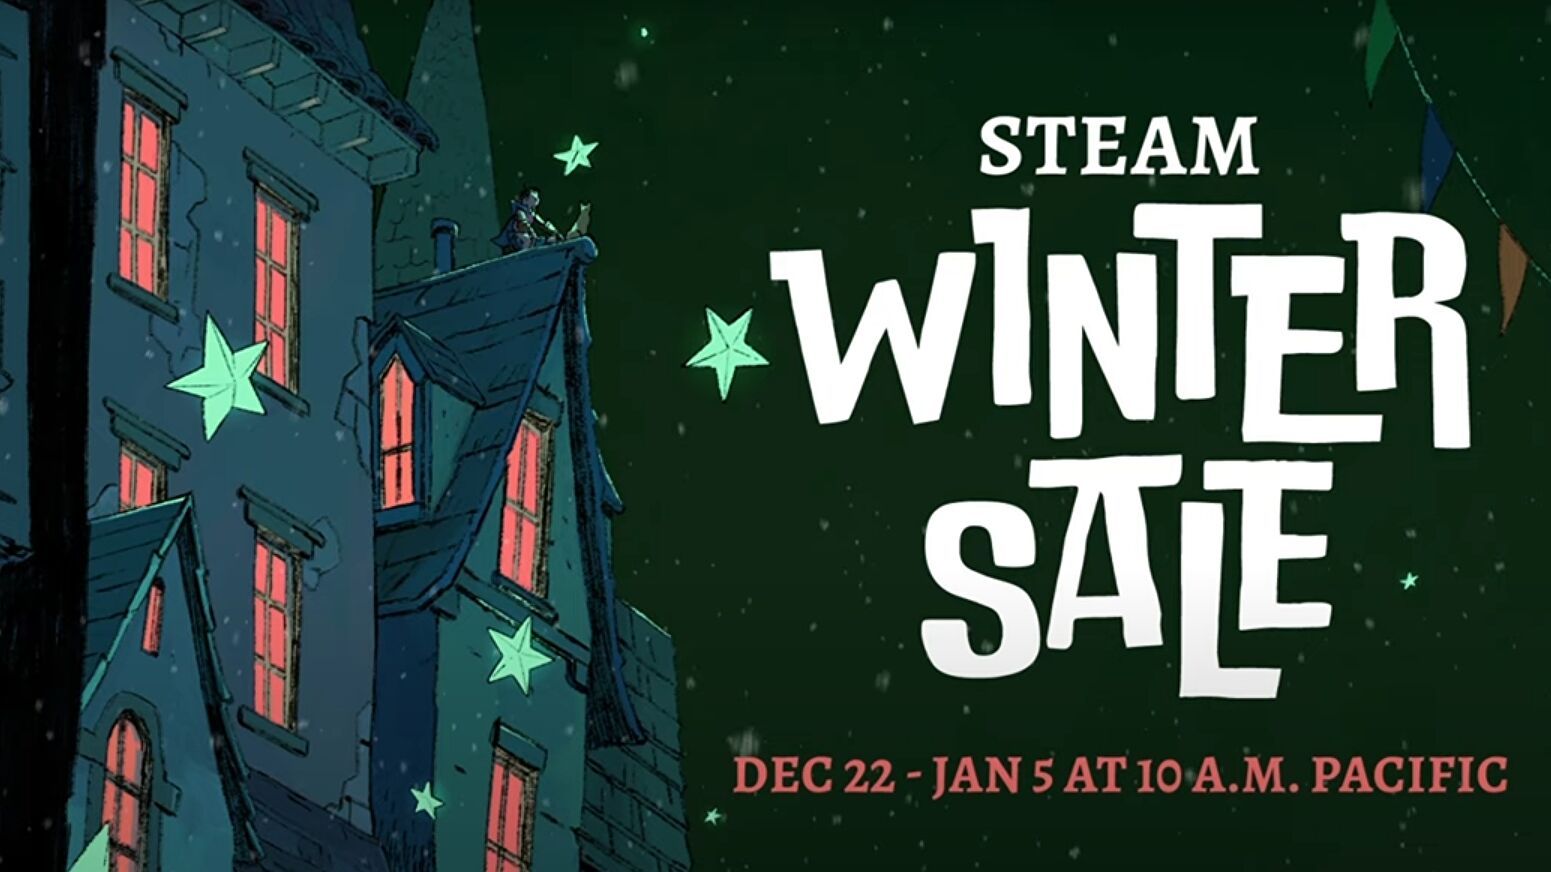 Brace yourselves, the Steam Winter Sale begins December 22nd